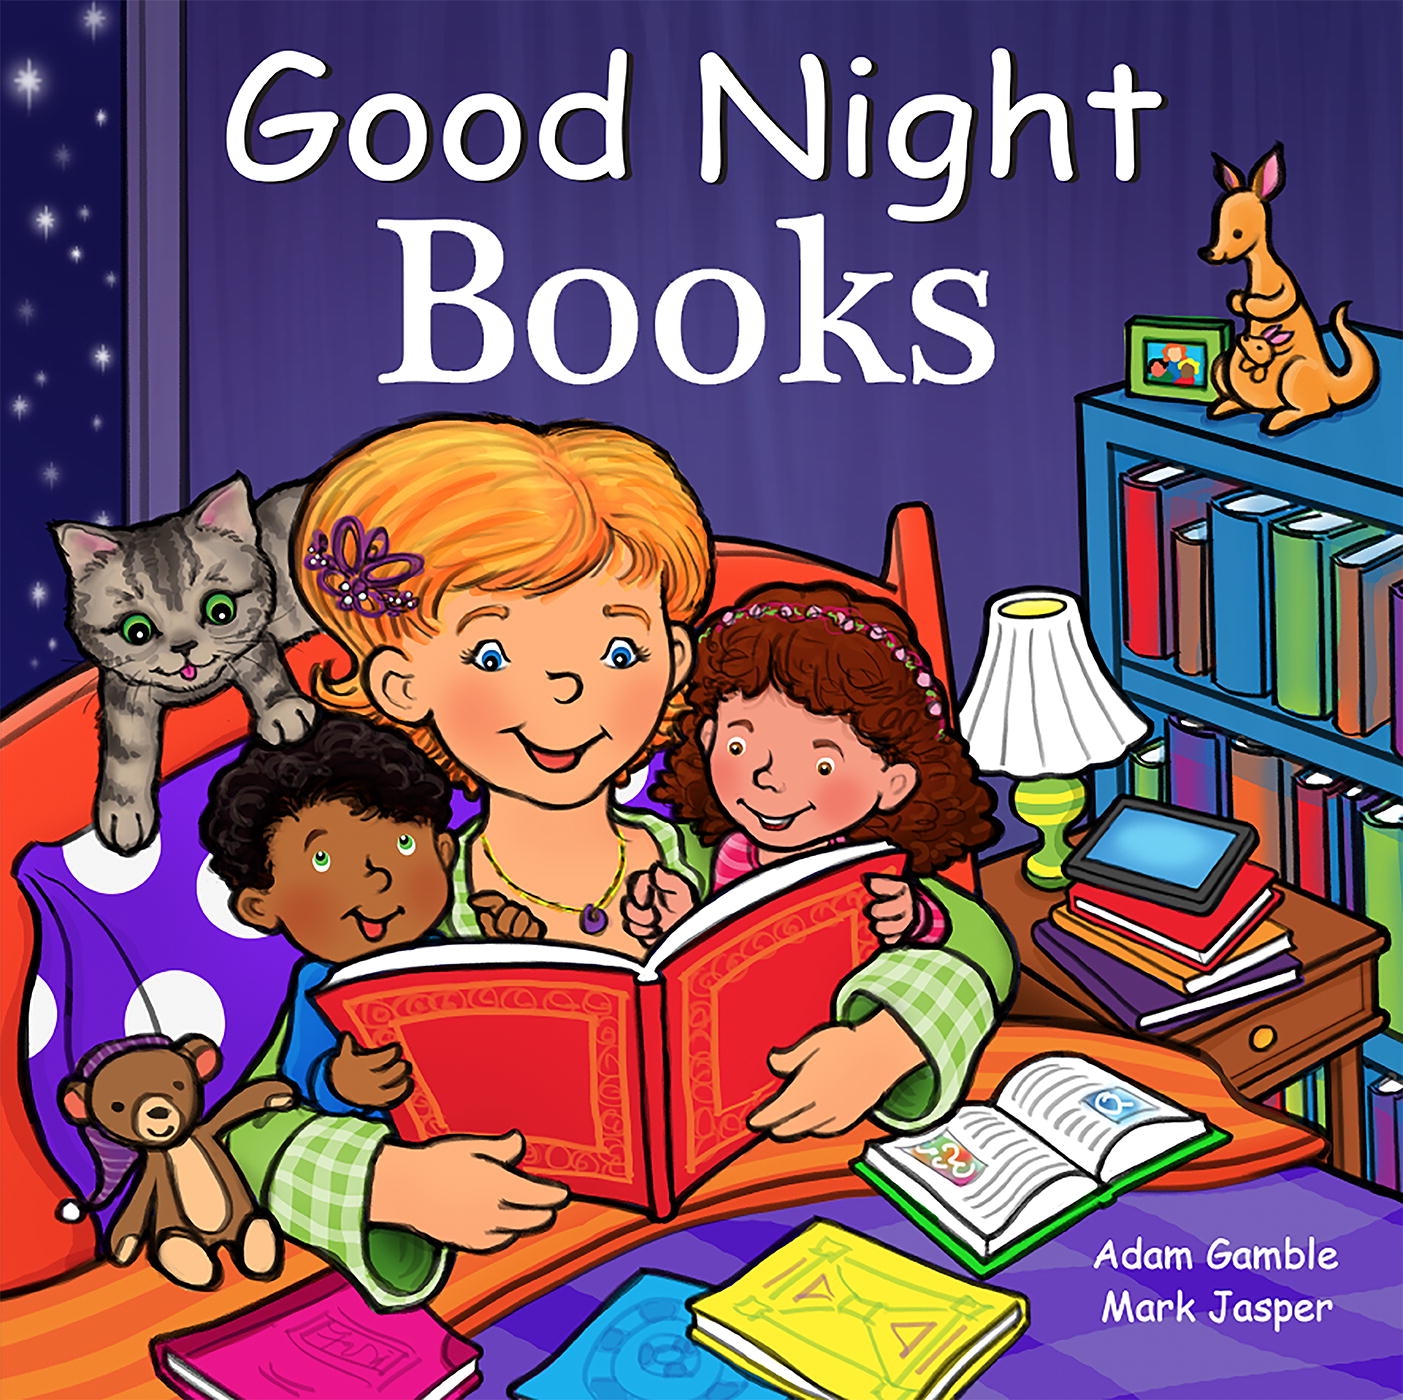 Good Night Books by Adam Gamble - Penguin Books New Zealand